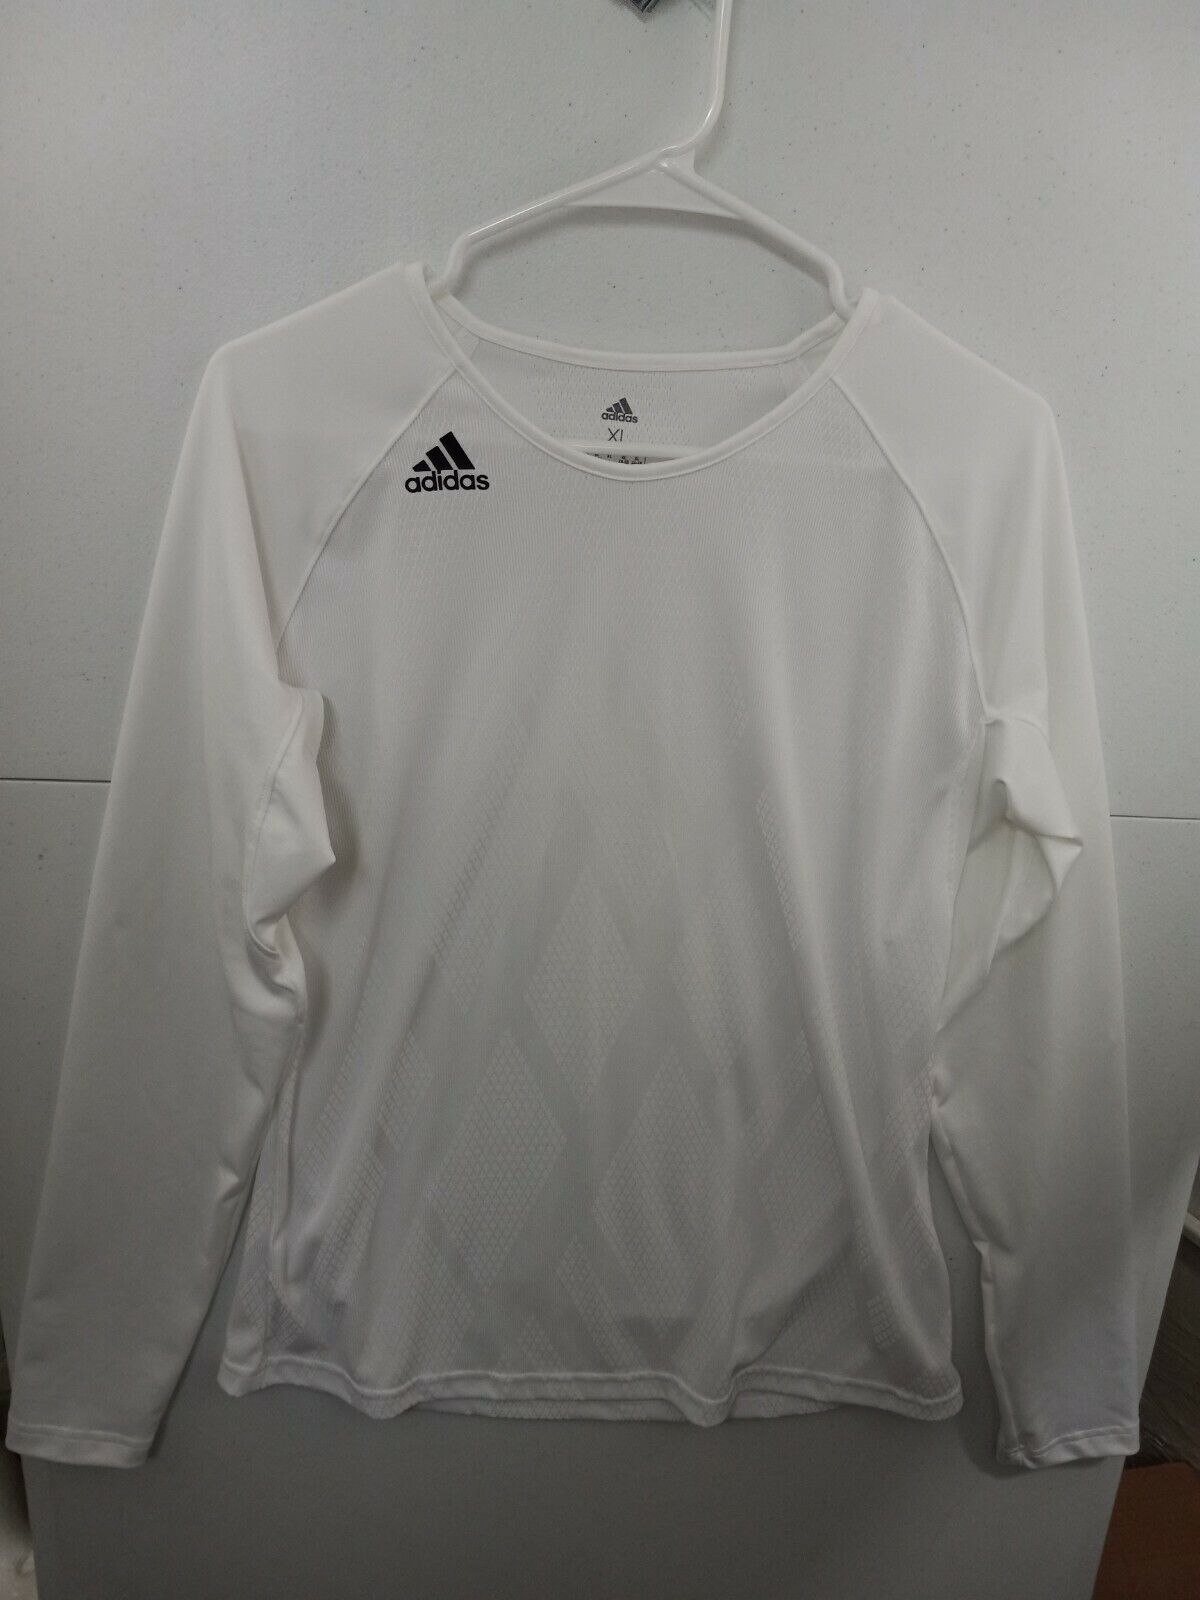 Adidas Quickset Long Sleeve Volleyball Jersey Shirt White Womens Xl Unworn